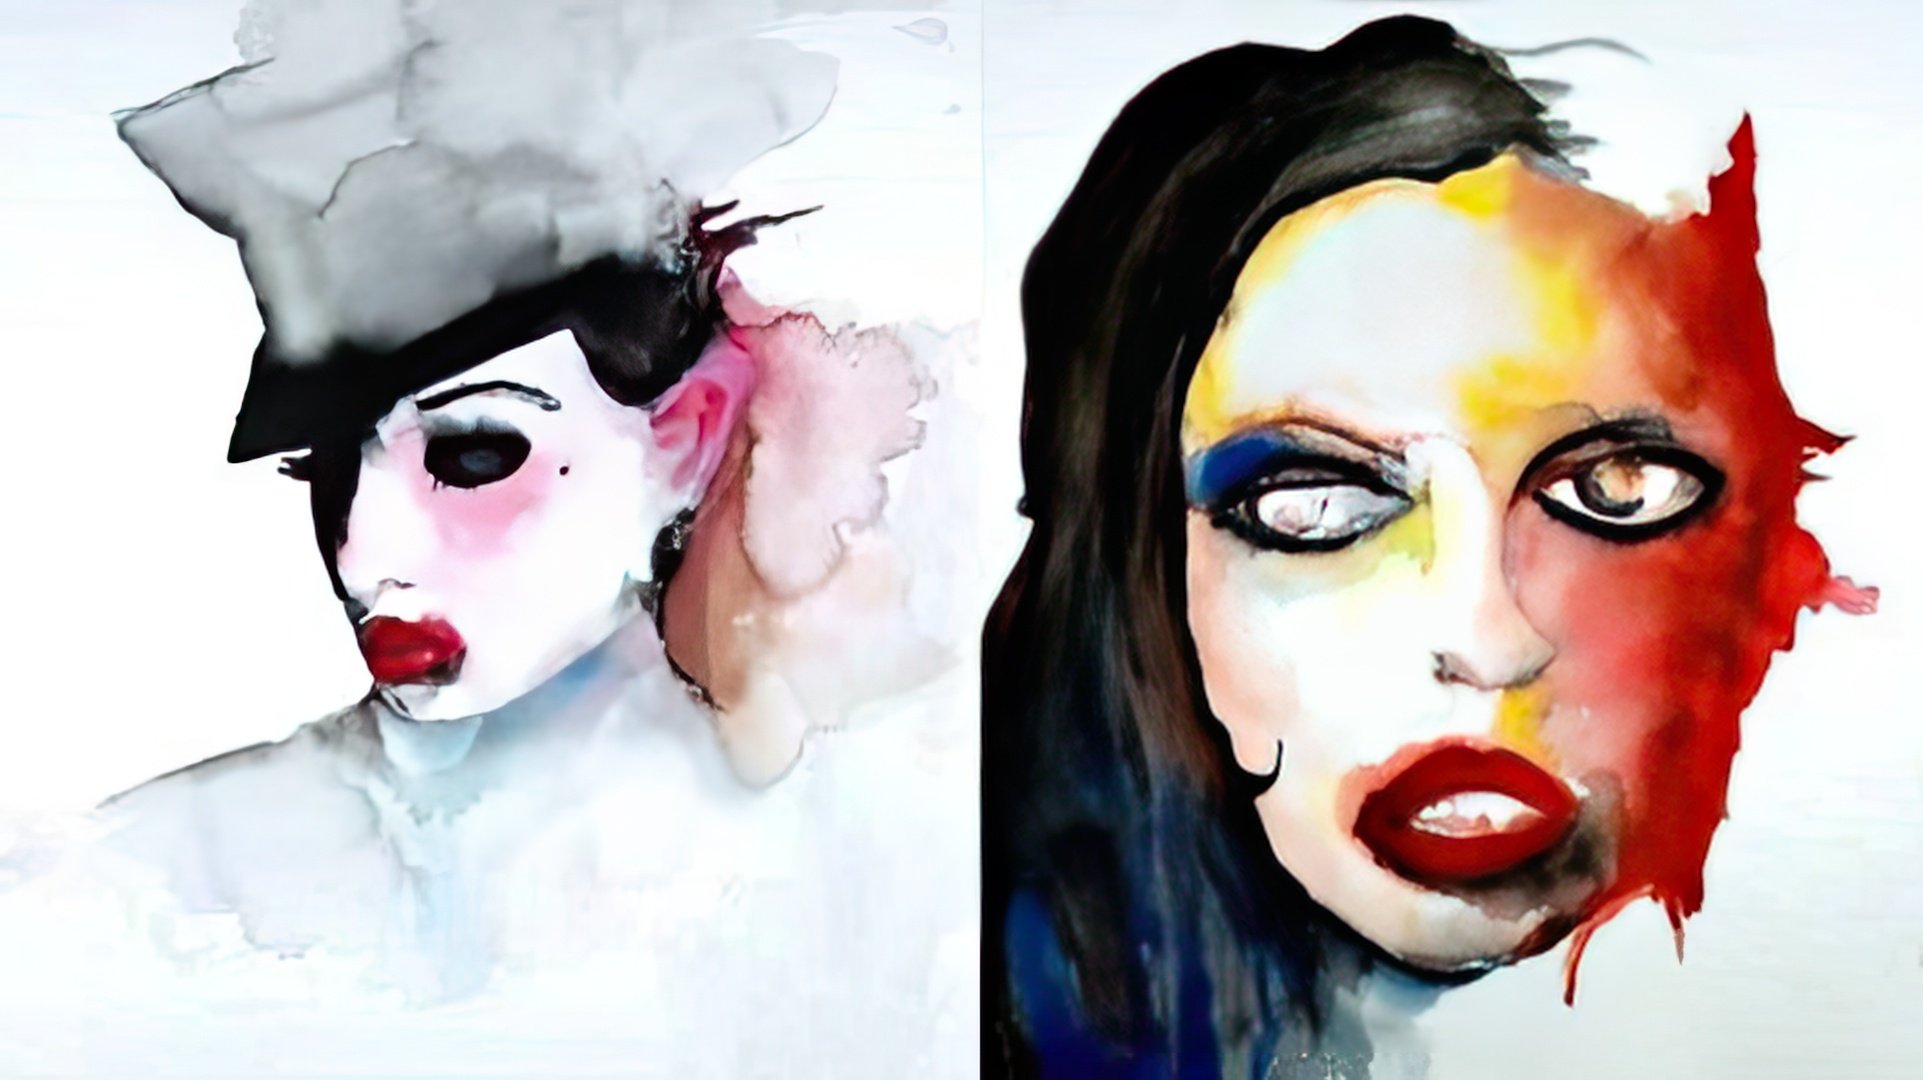 Paintings by Marilyn Manson